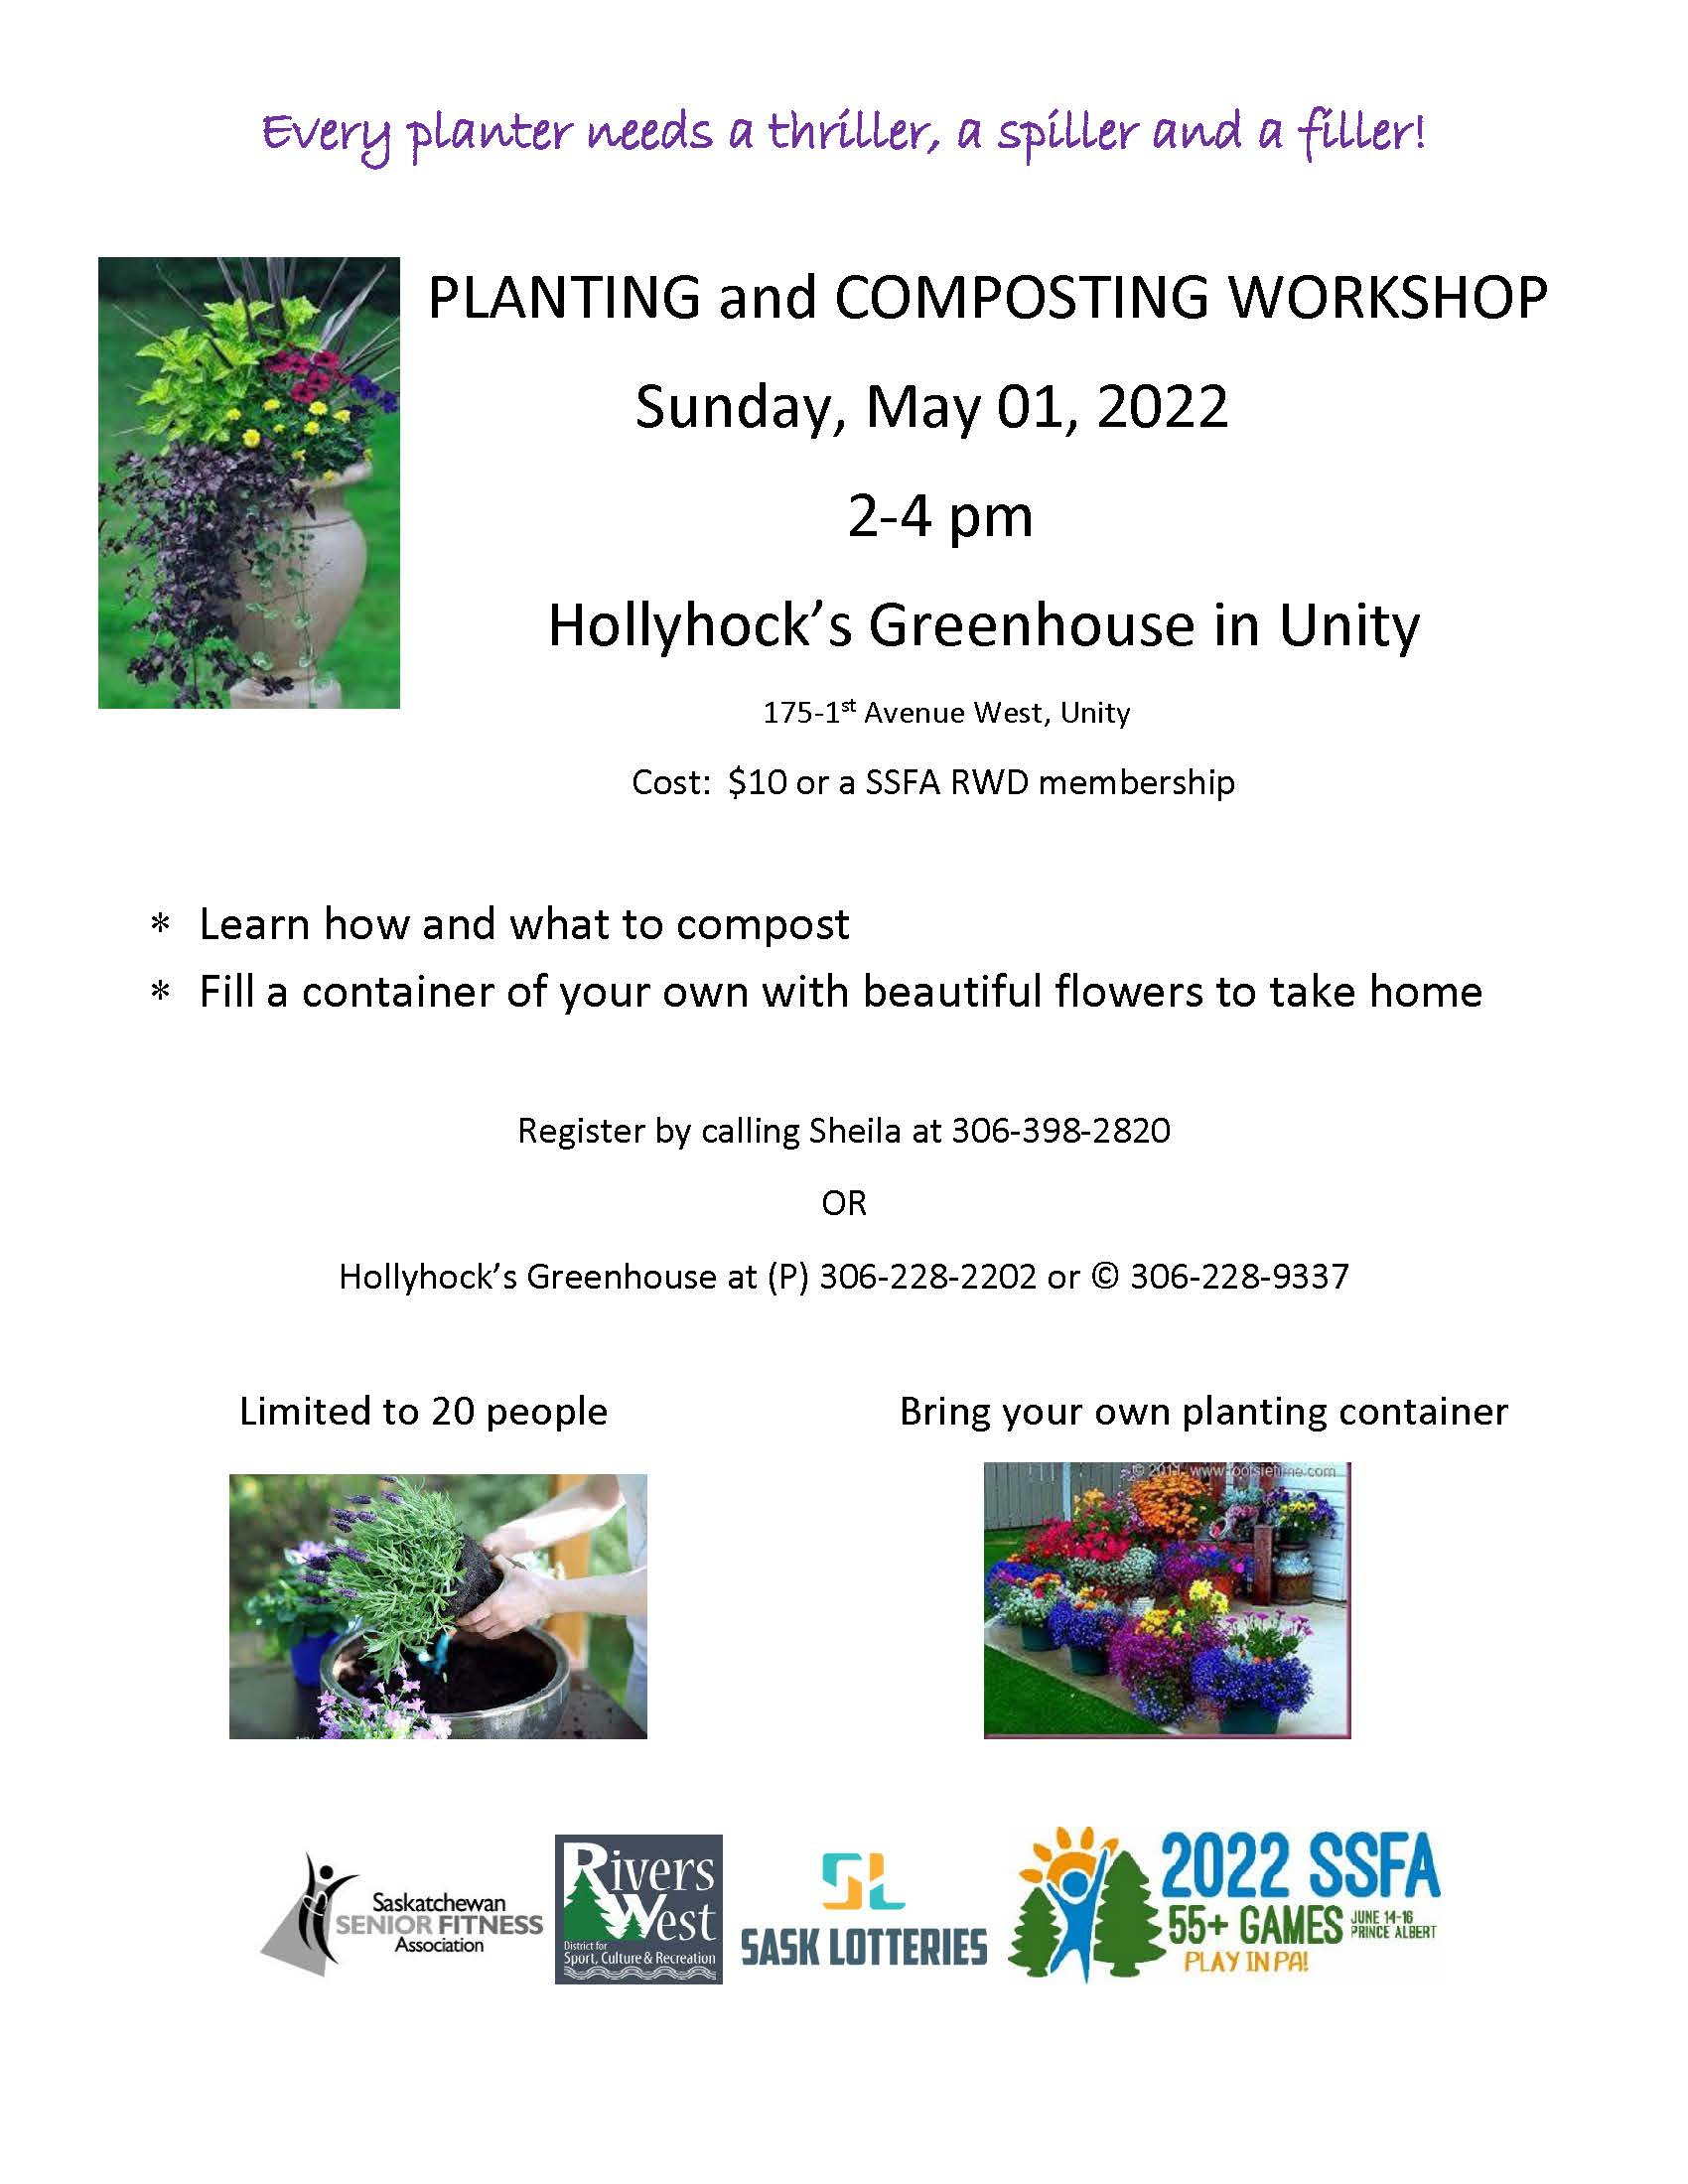 may 1 composting workshop